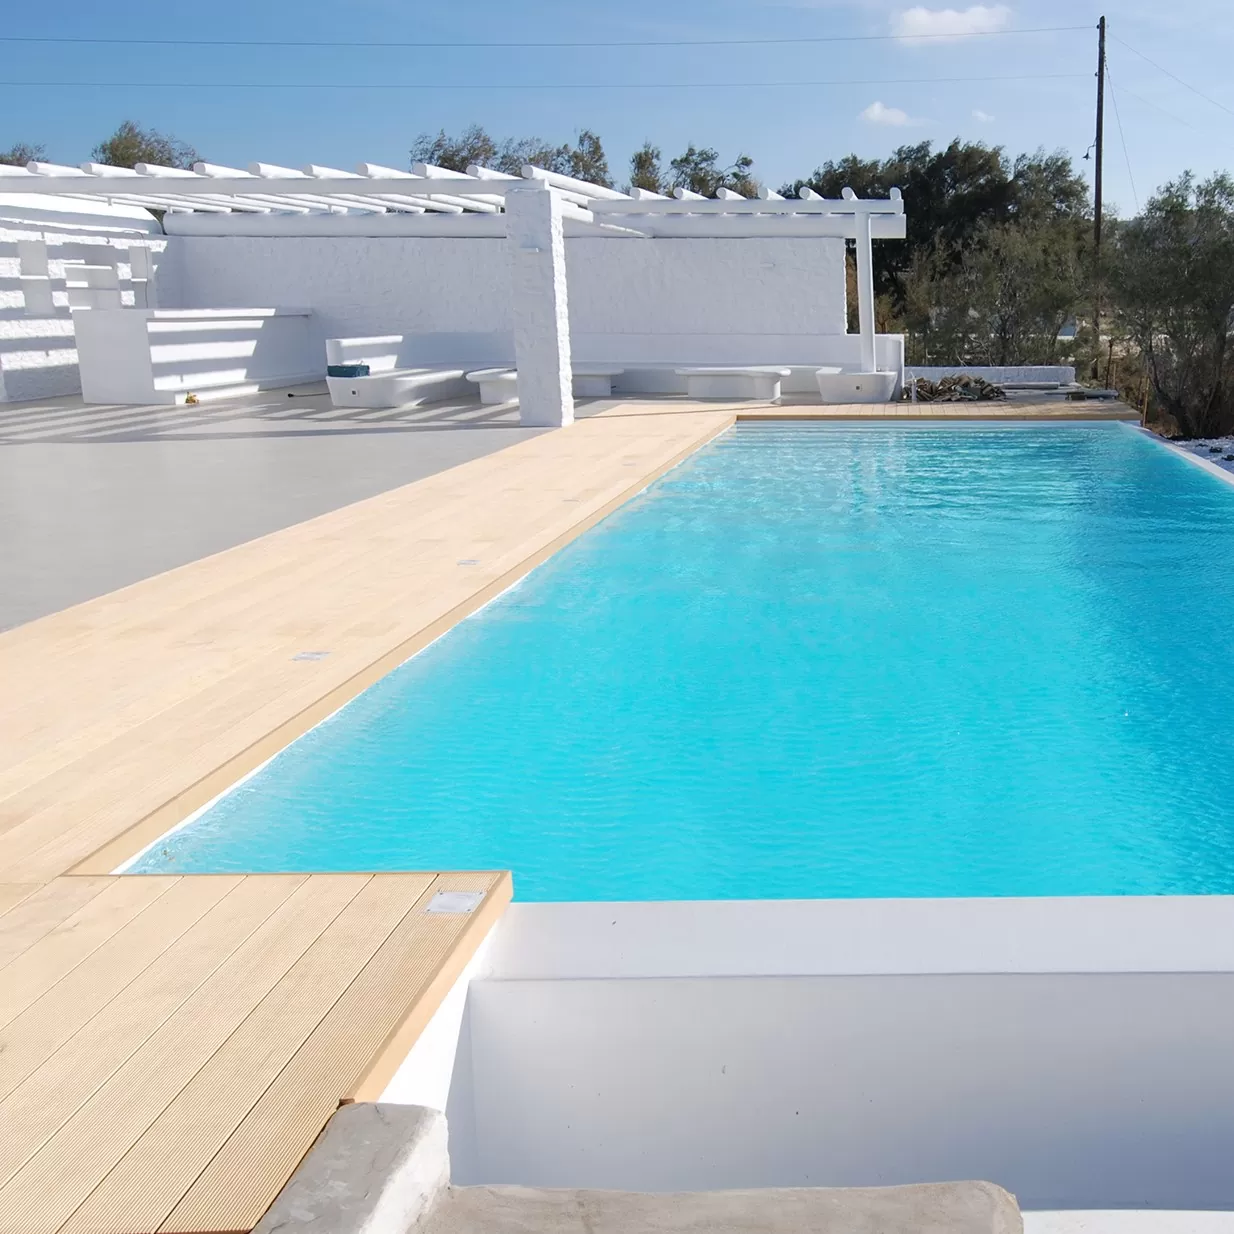 Accoya wood swimming pool deck for Greek dream destination